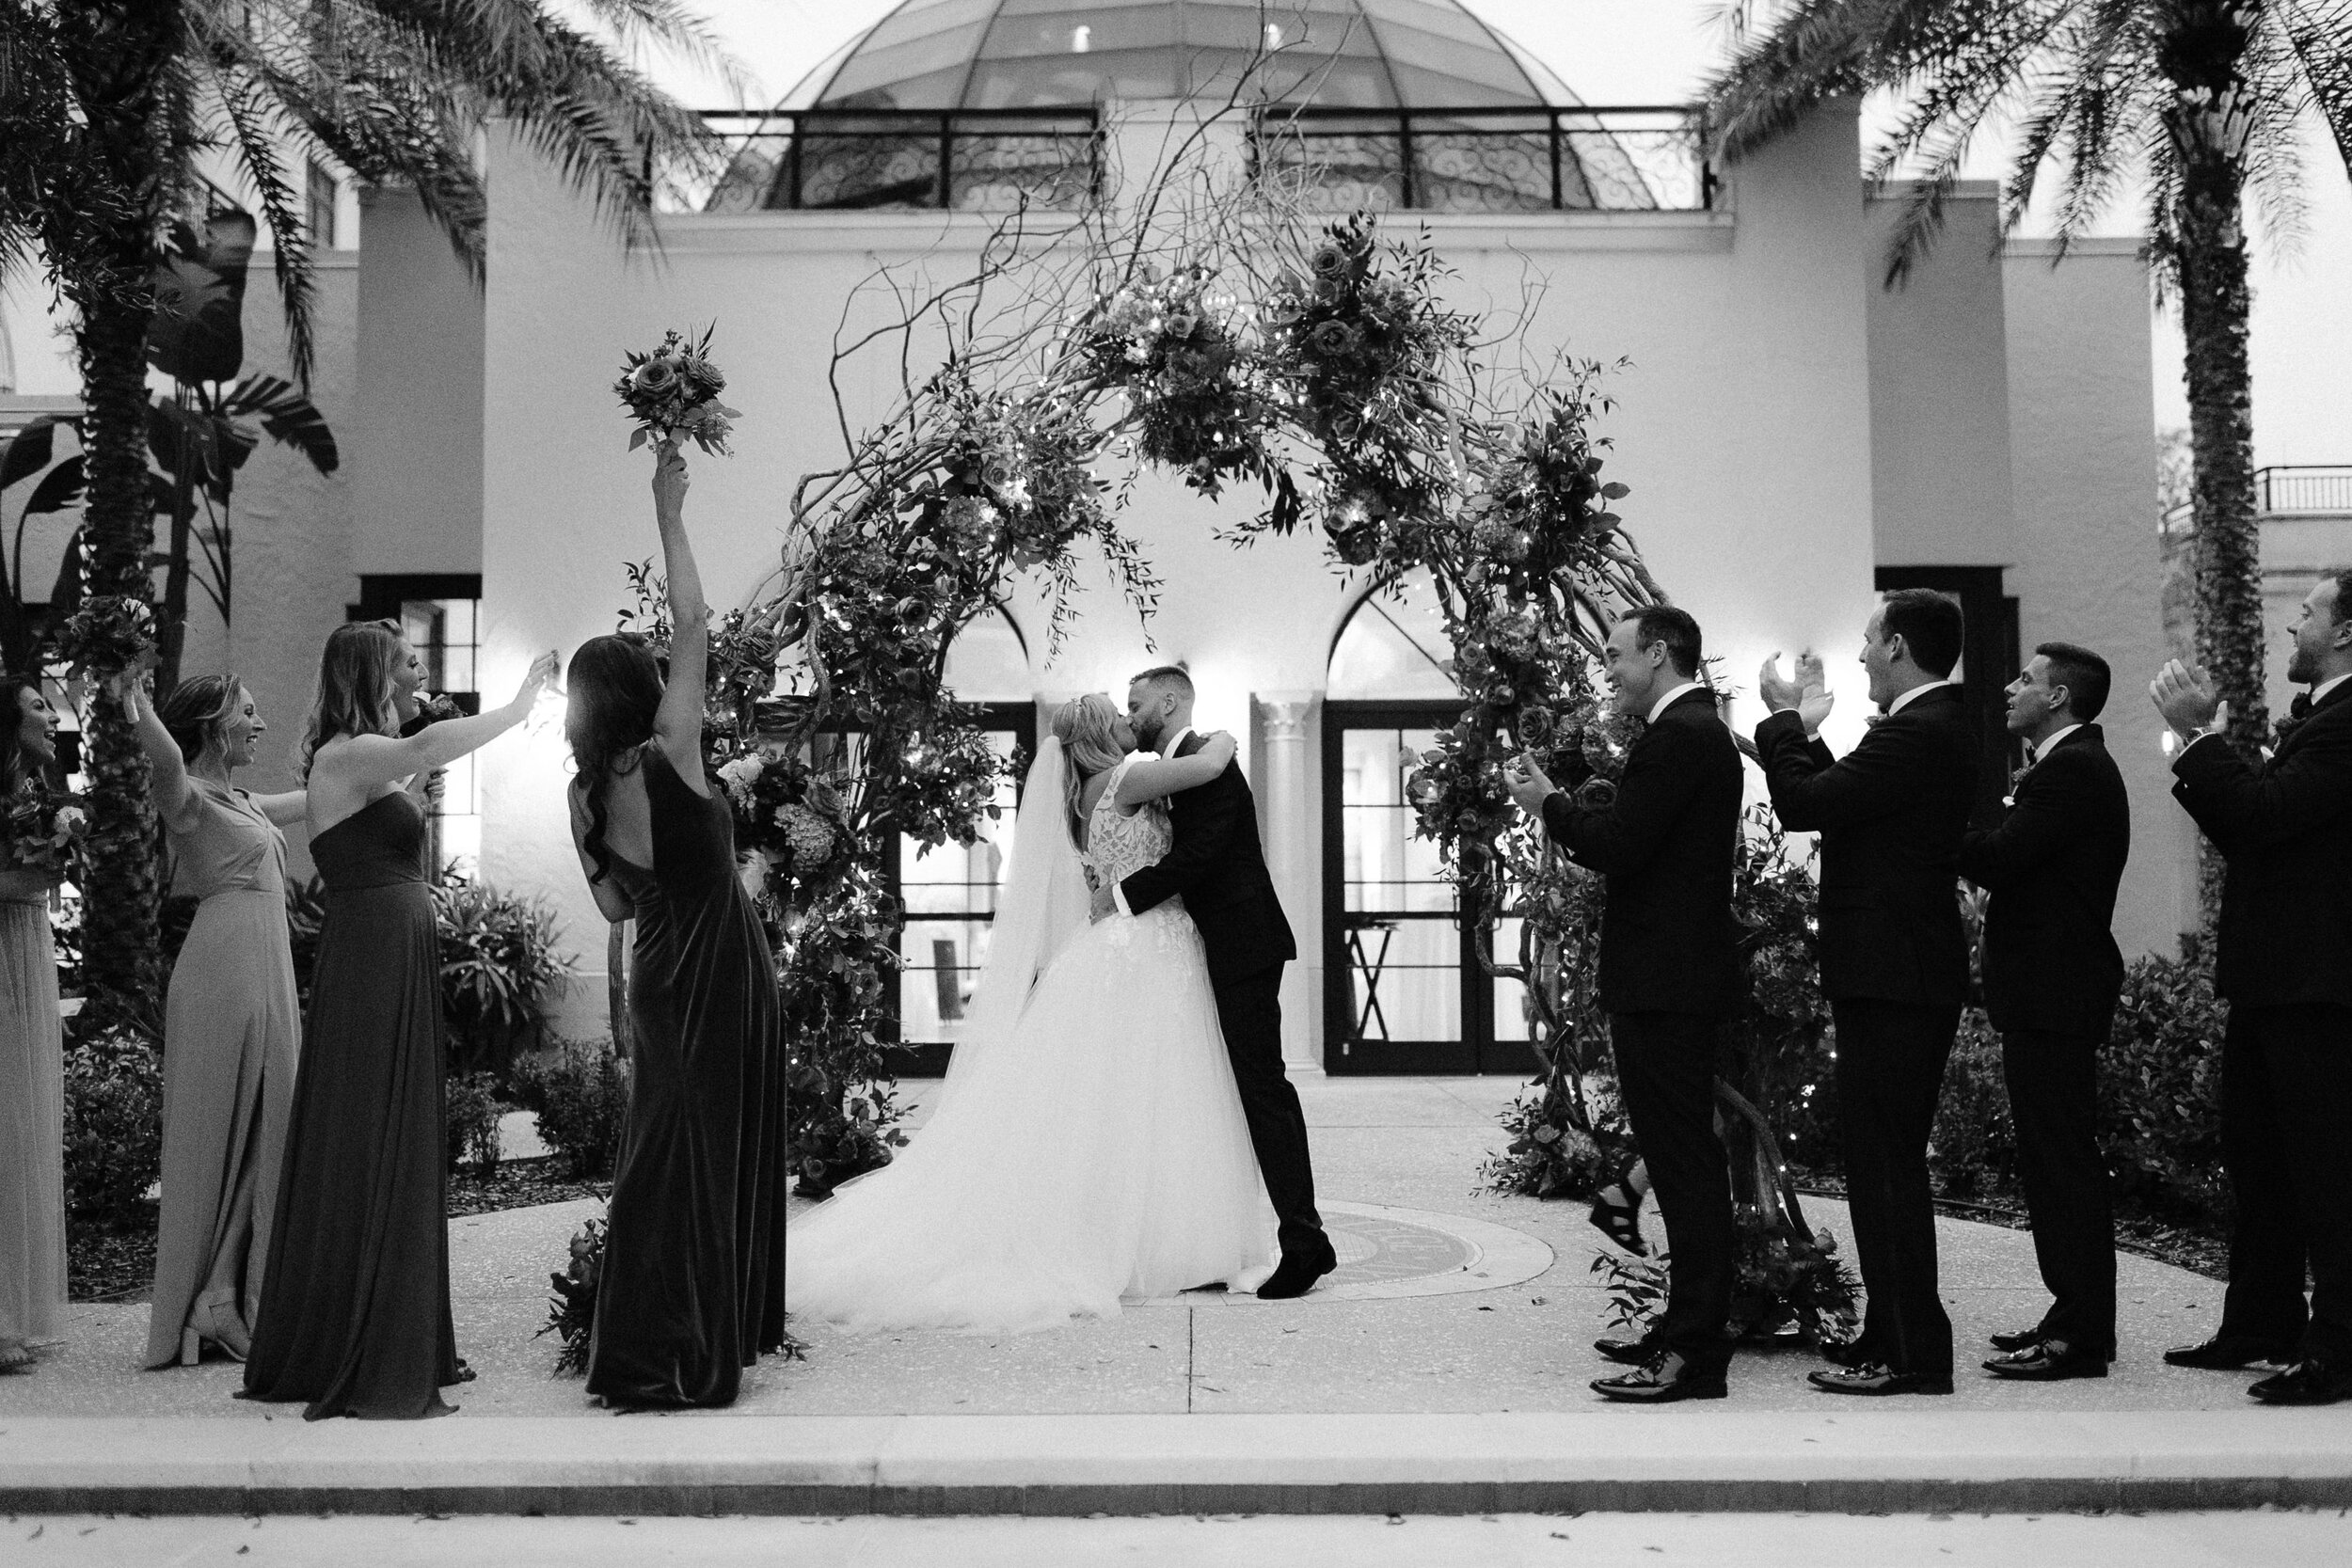  Sunglow Photography, Alfond Inn Wedding Winter Park, FL 